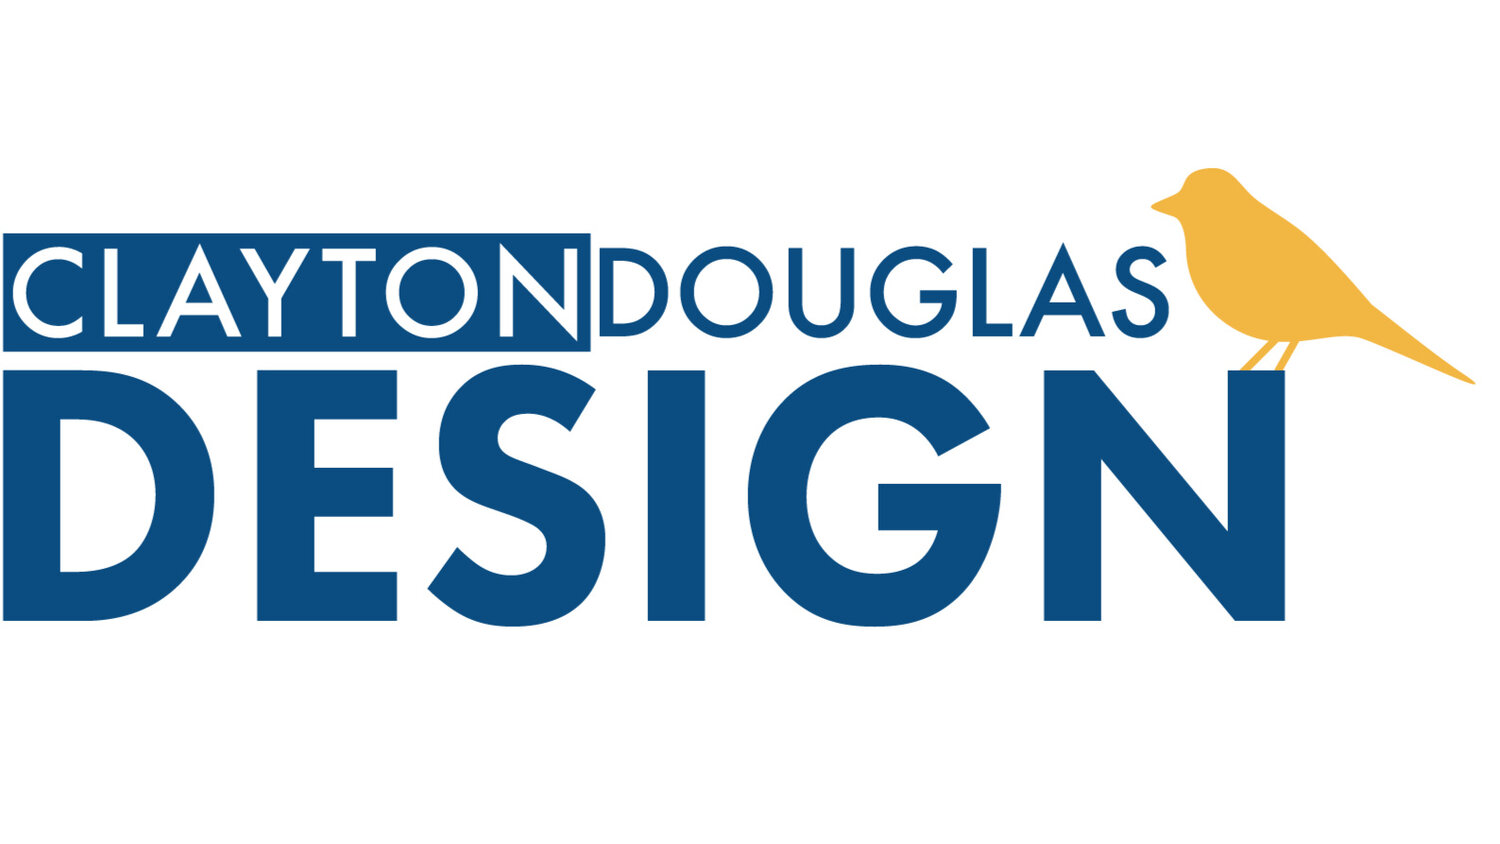 Clayton Douglas Design - Web Design &amp; Branding in Folsom, CA